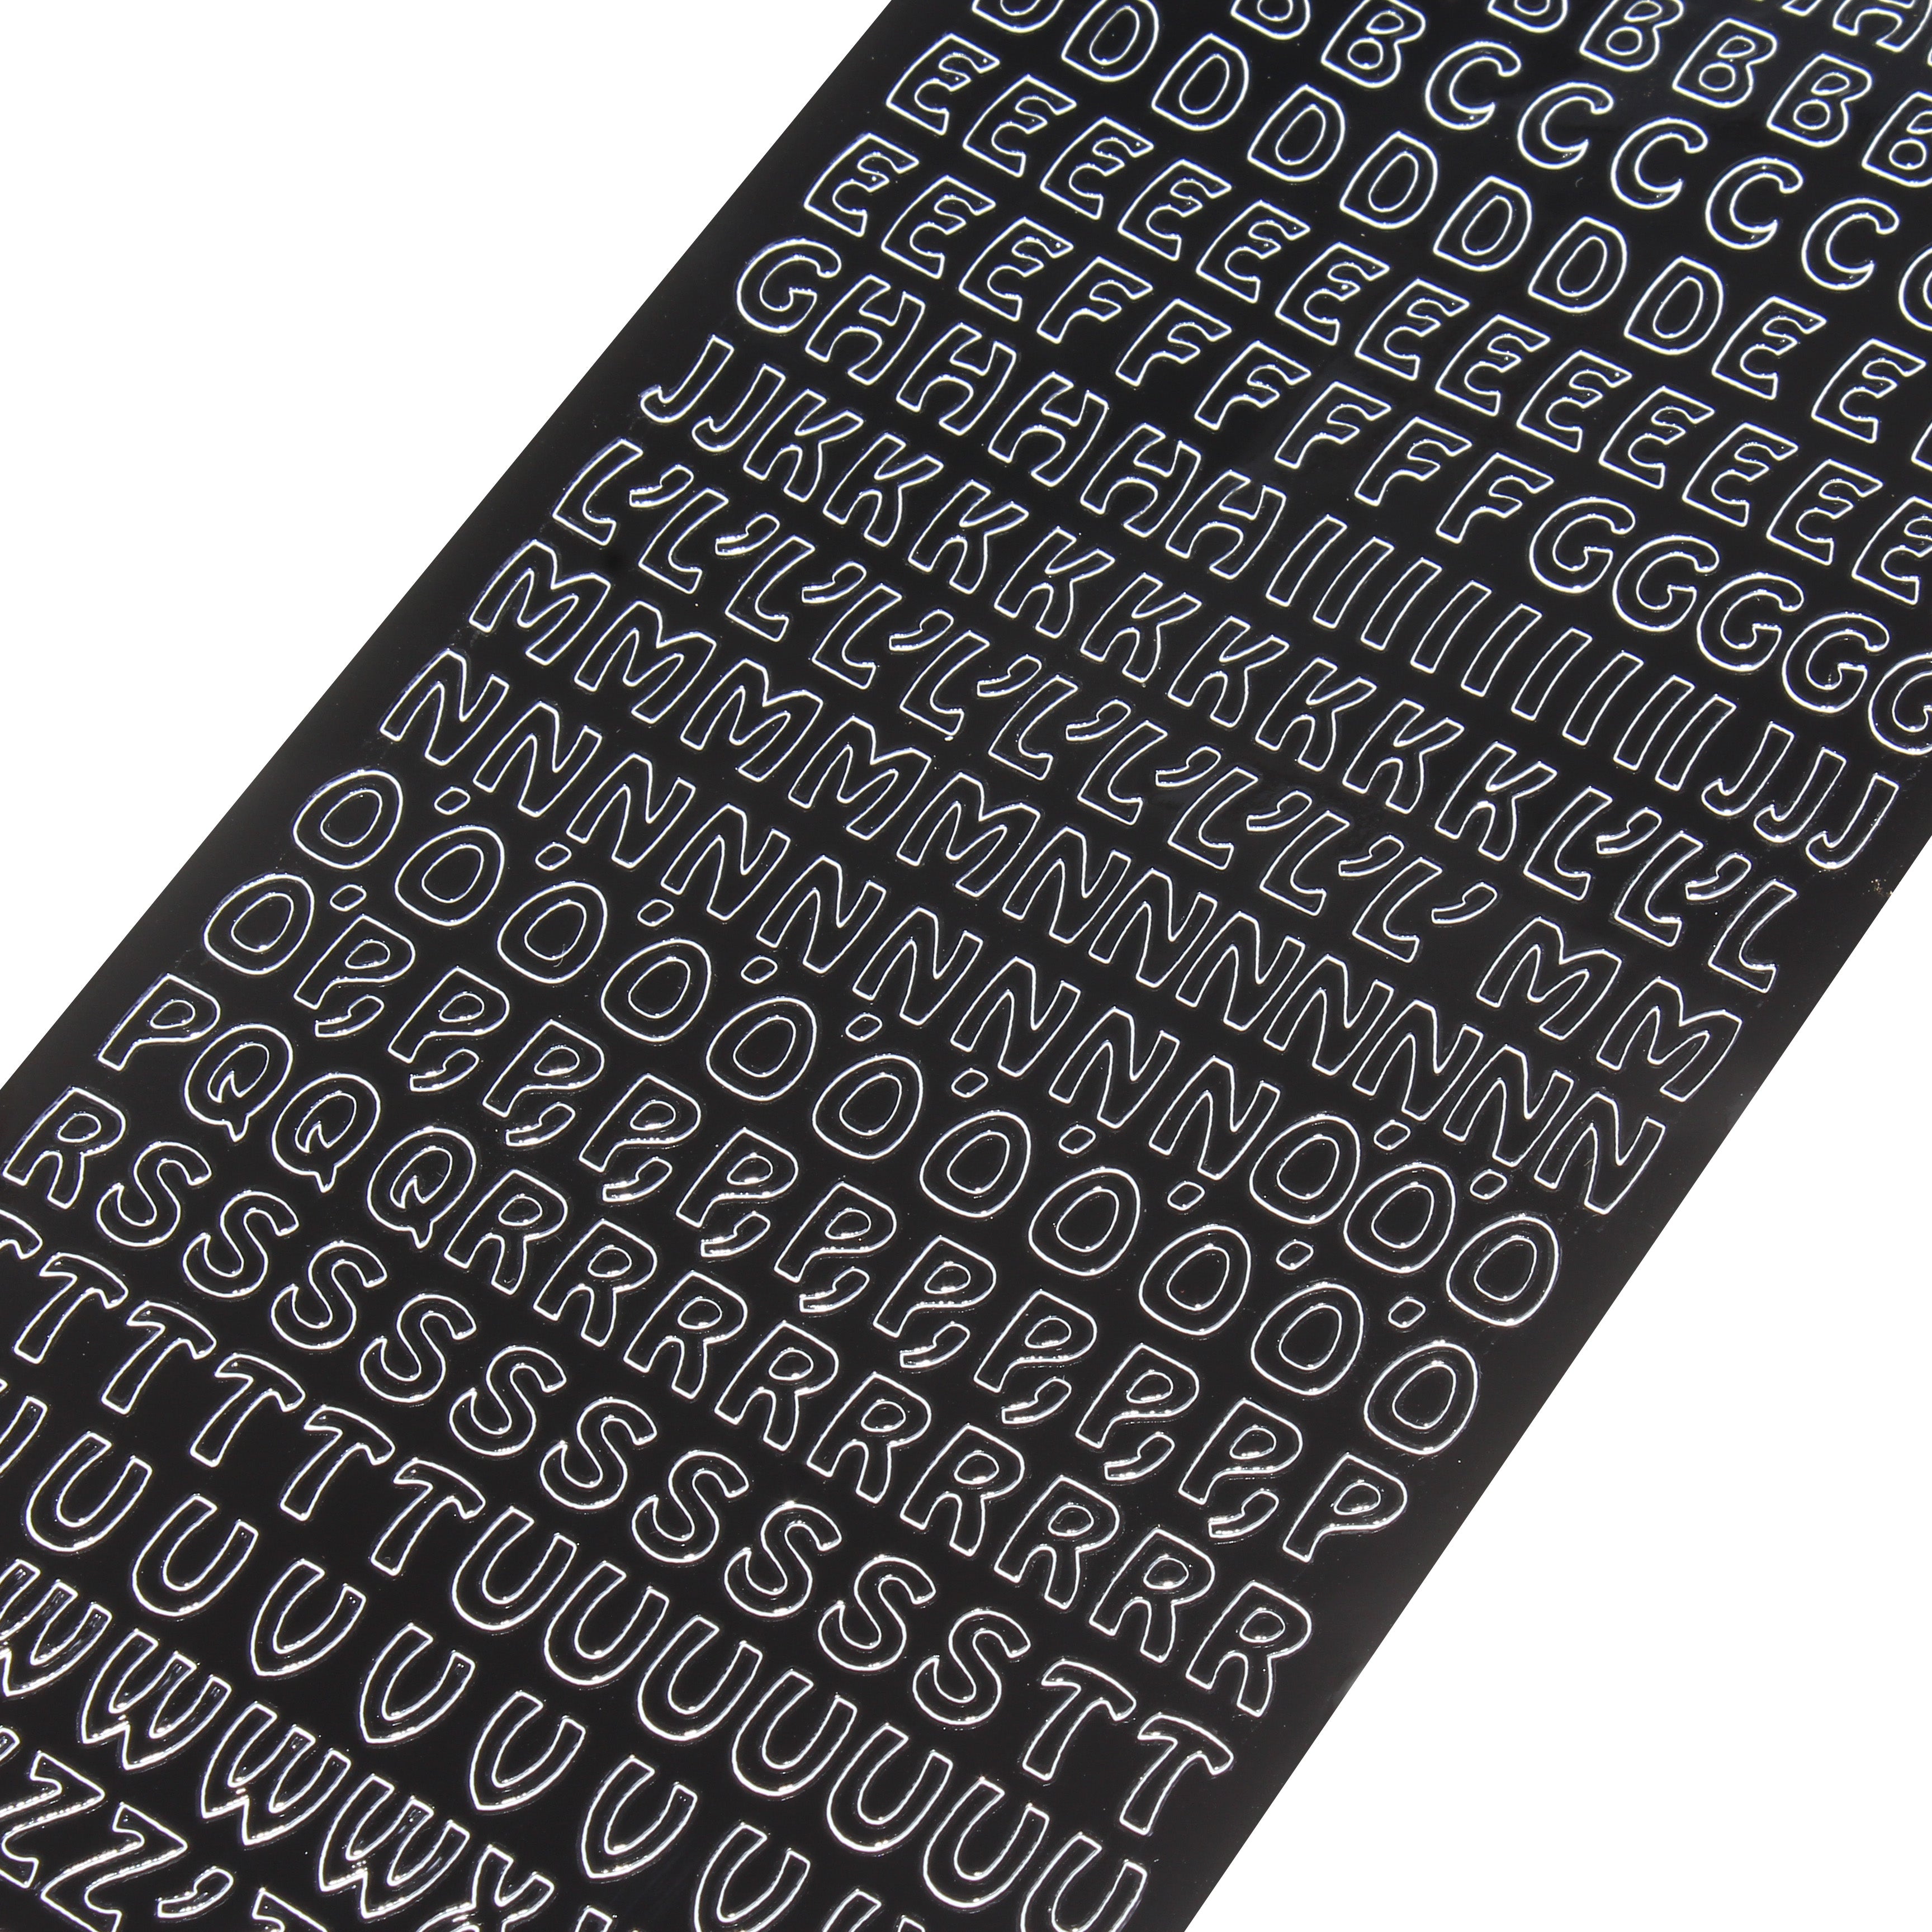 Peel Off Sticker Alphabet and Signs Black 10 X 23cm 1Sheet